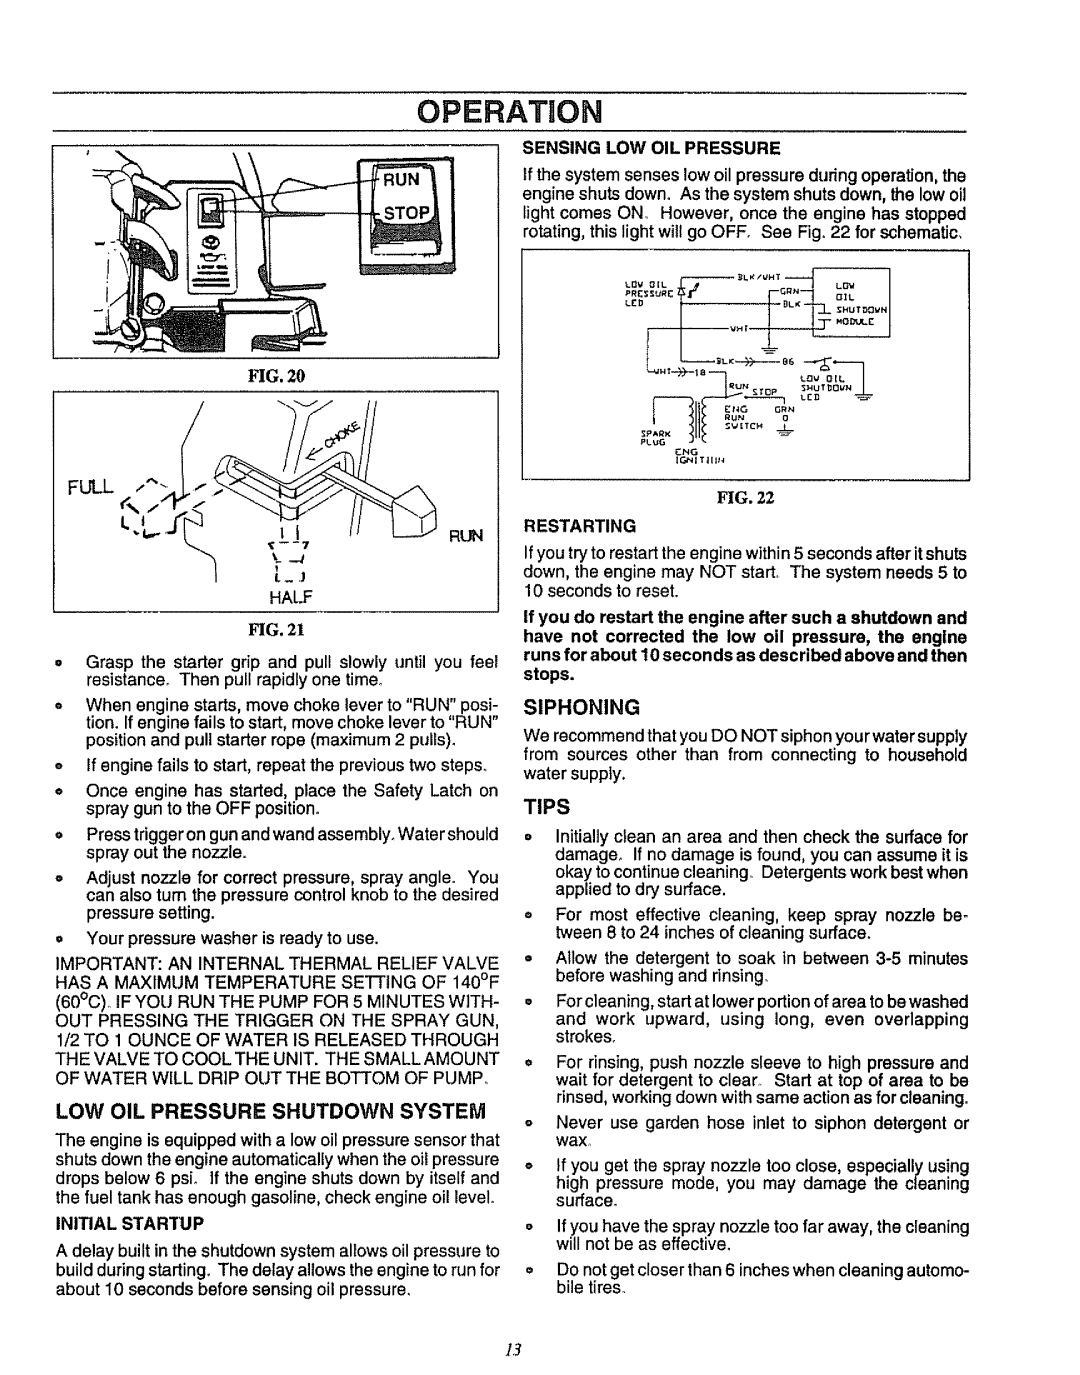 Craftsman 580.751781 owner manual Low Oil Pressure Shutdown System, Siphoning, Tips, Operation, Full 